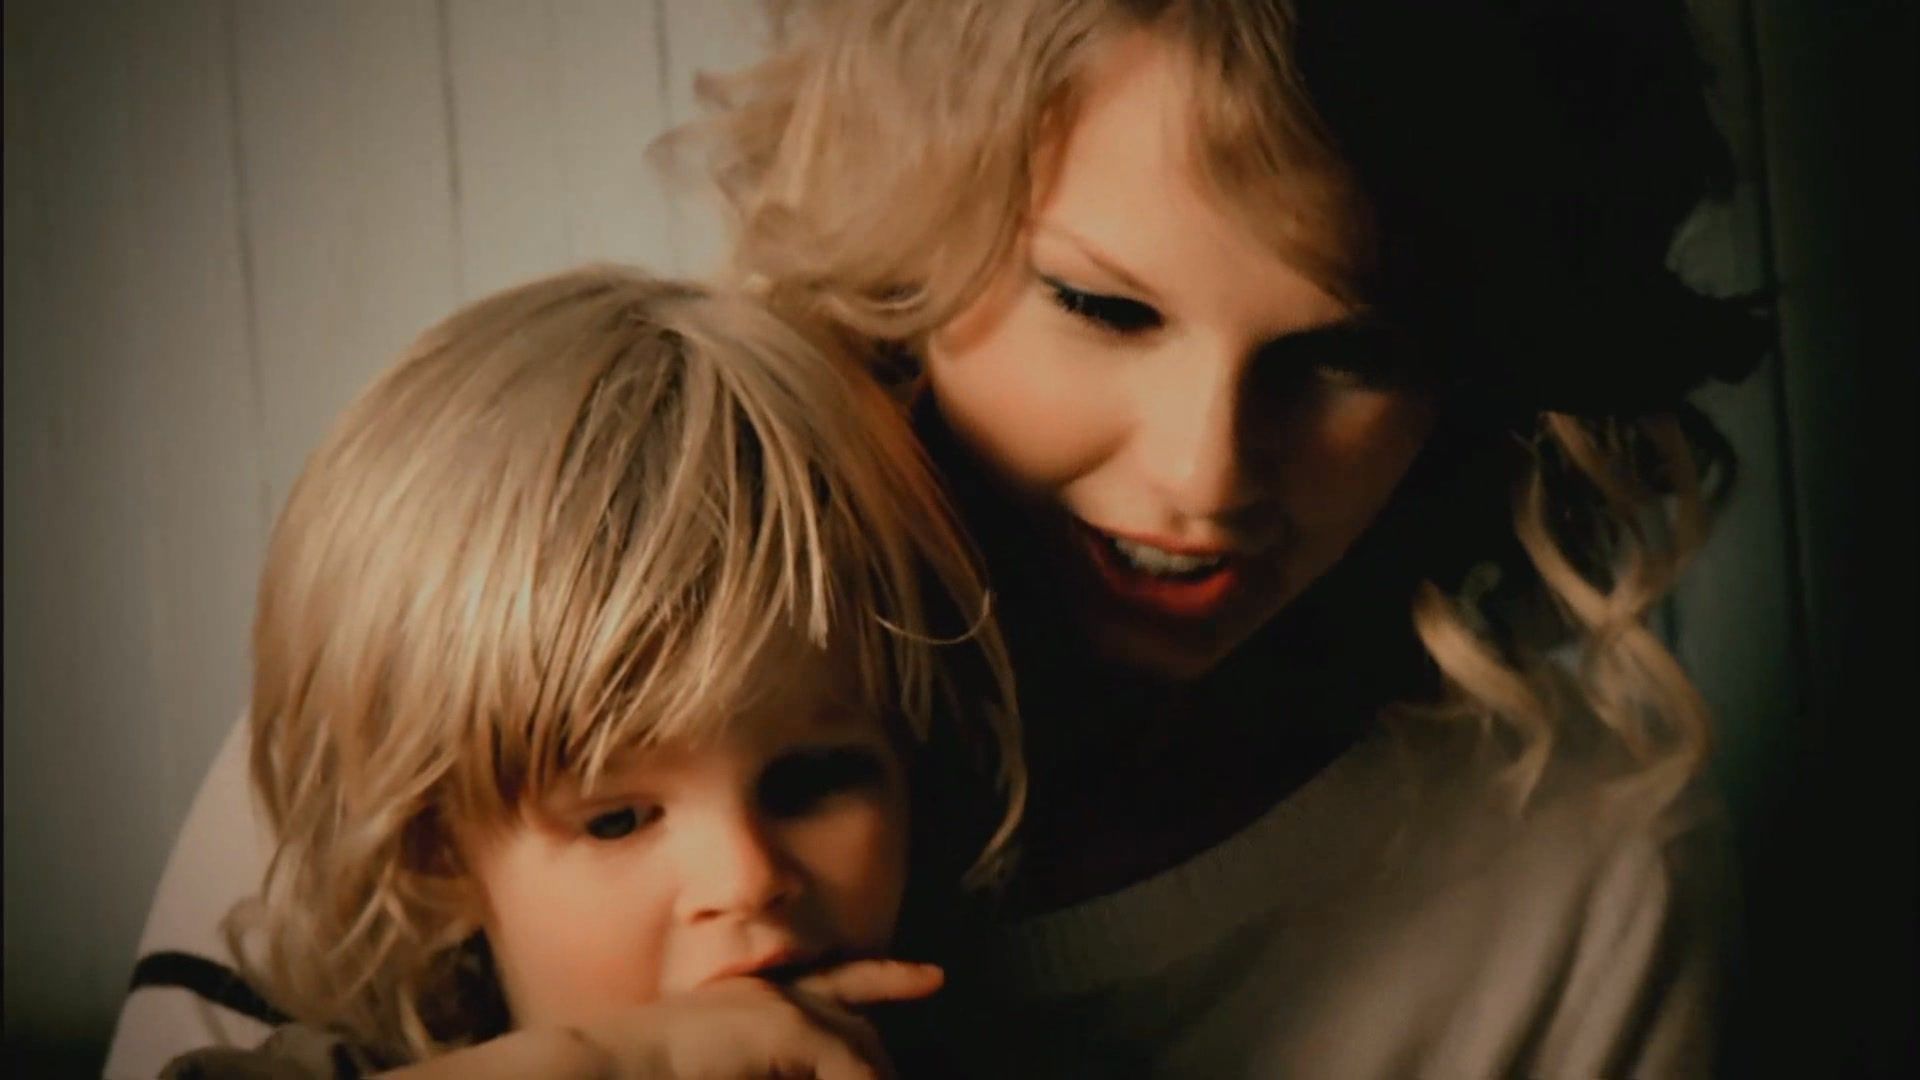 Taylor Swift Image: Taylor Swift [Music Video]. Taylor swift music videos, Taylor swift image, Taylor swift mine